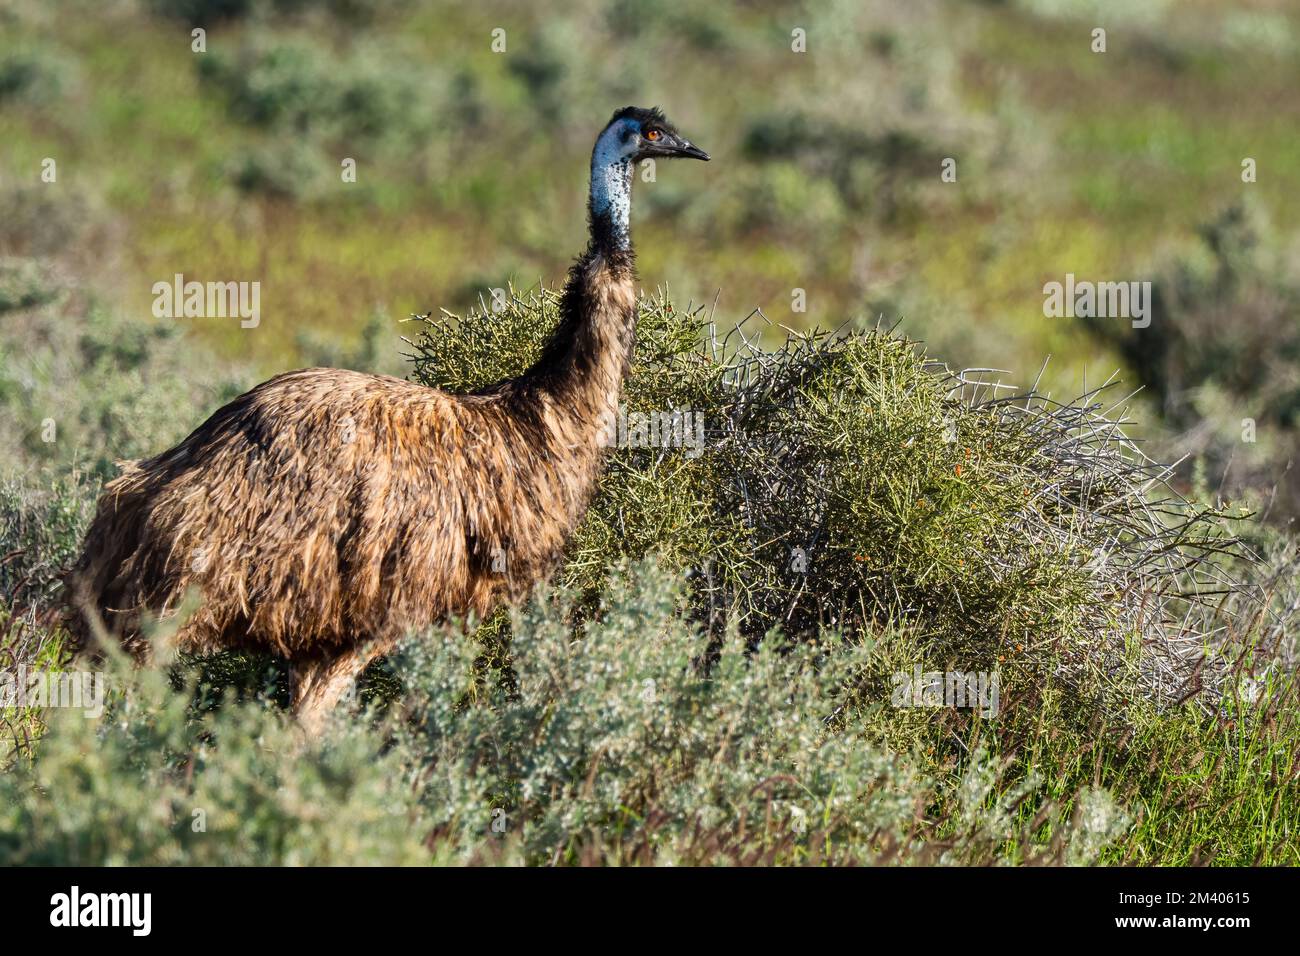 Adult emu, Dramaius novaehollandiae, in the bush at Cape Range National Park, Australia. Stock Photo